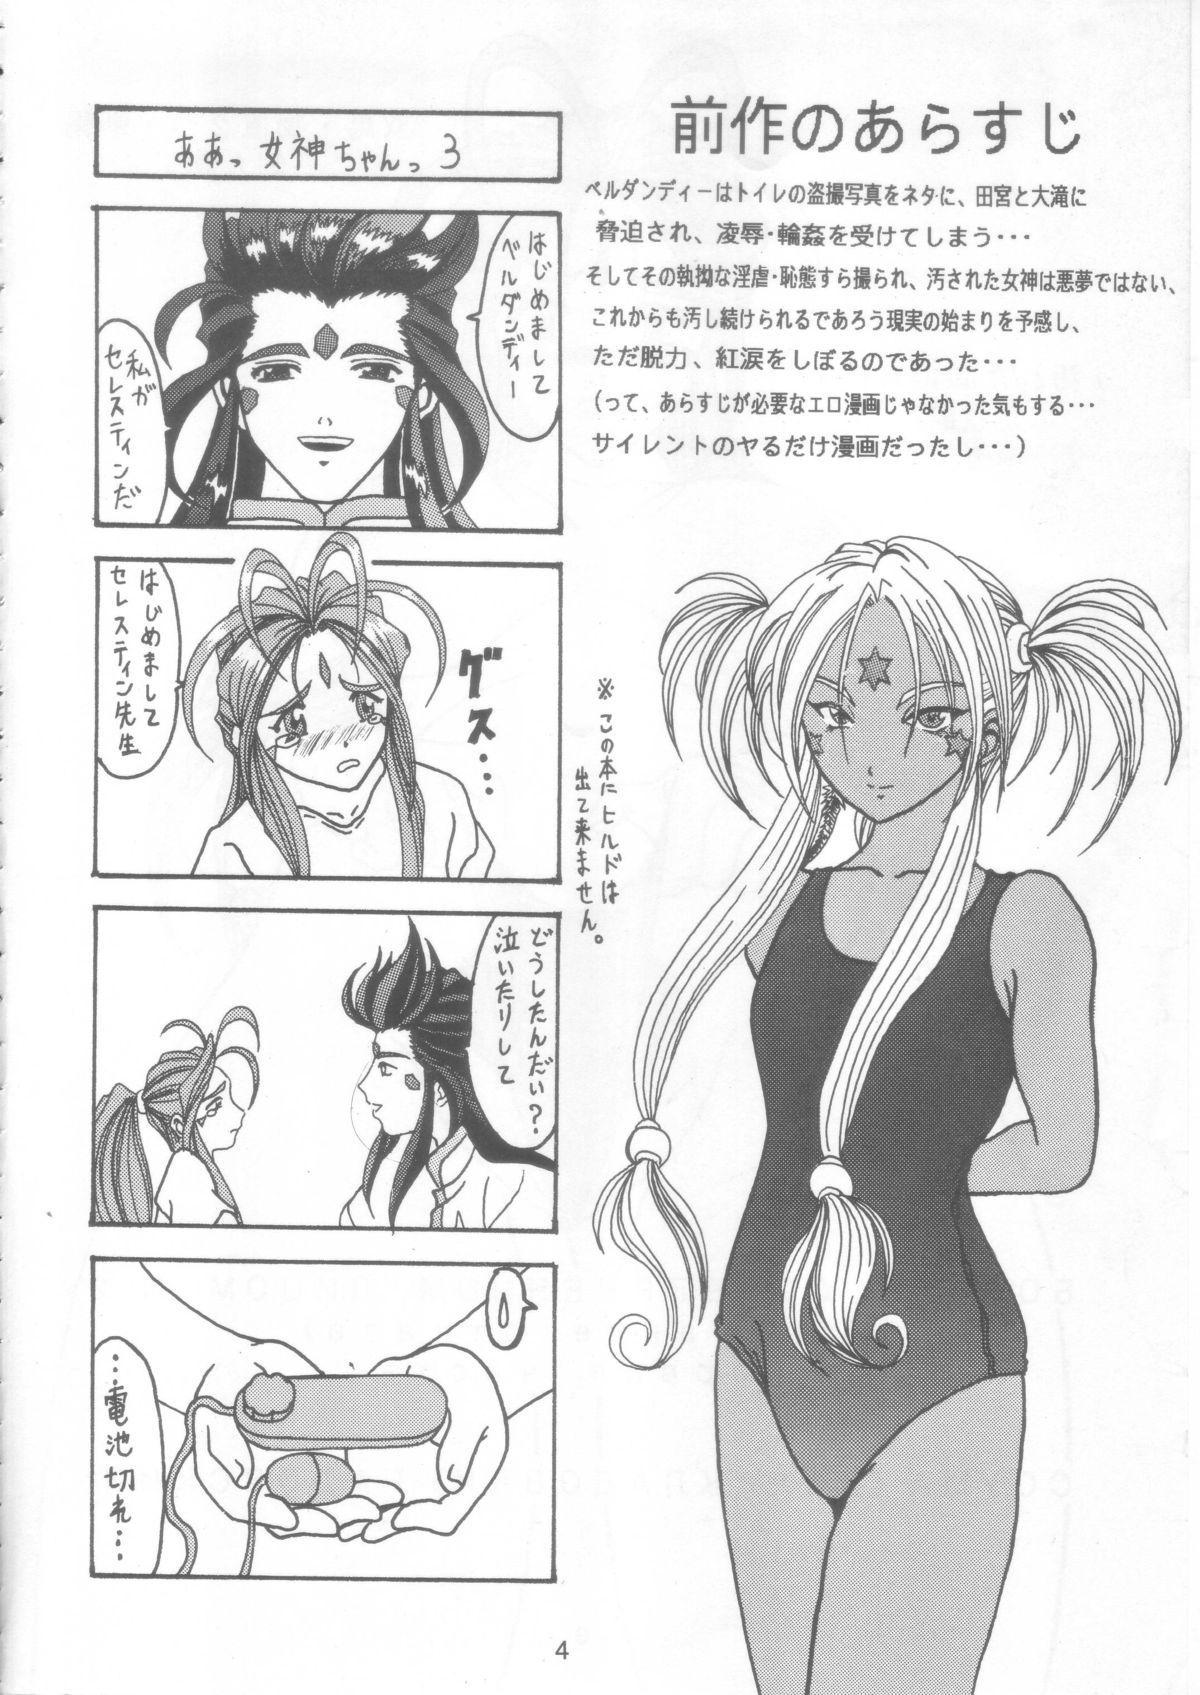 Maledom Yogoreta Kao no Megami 2 - Ah my goddess Twinkstudios - Page 3